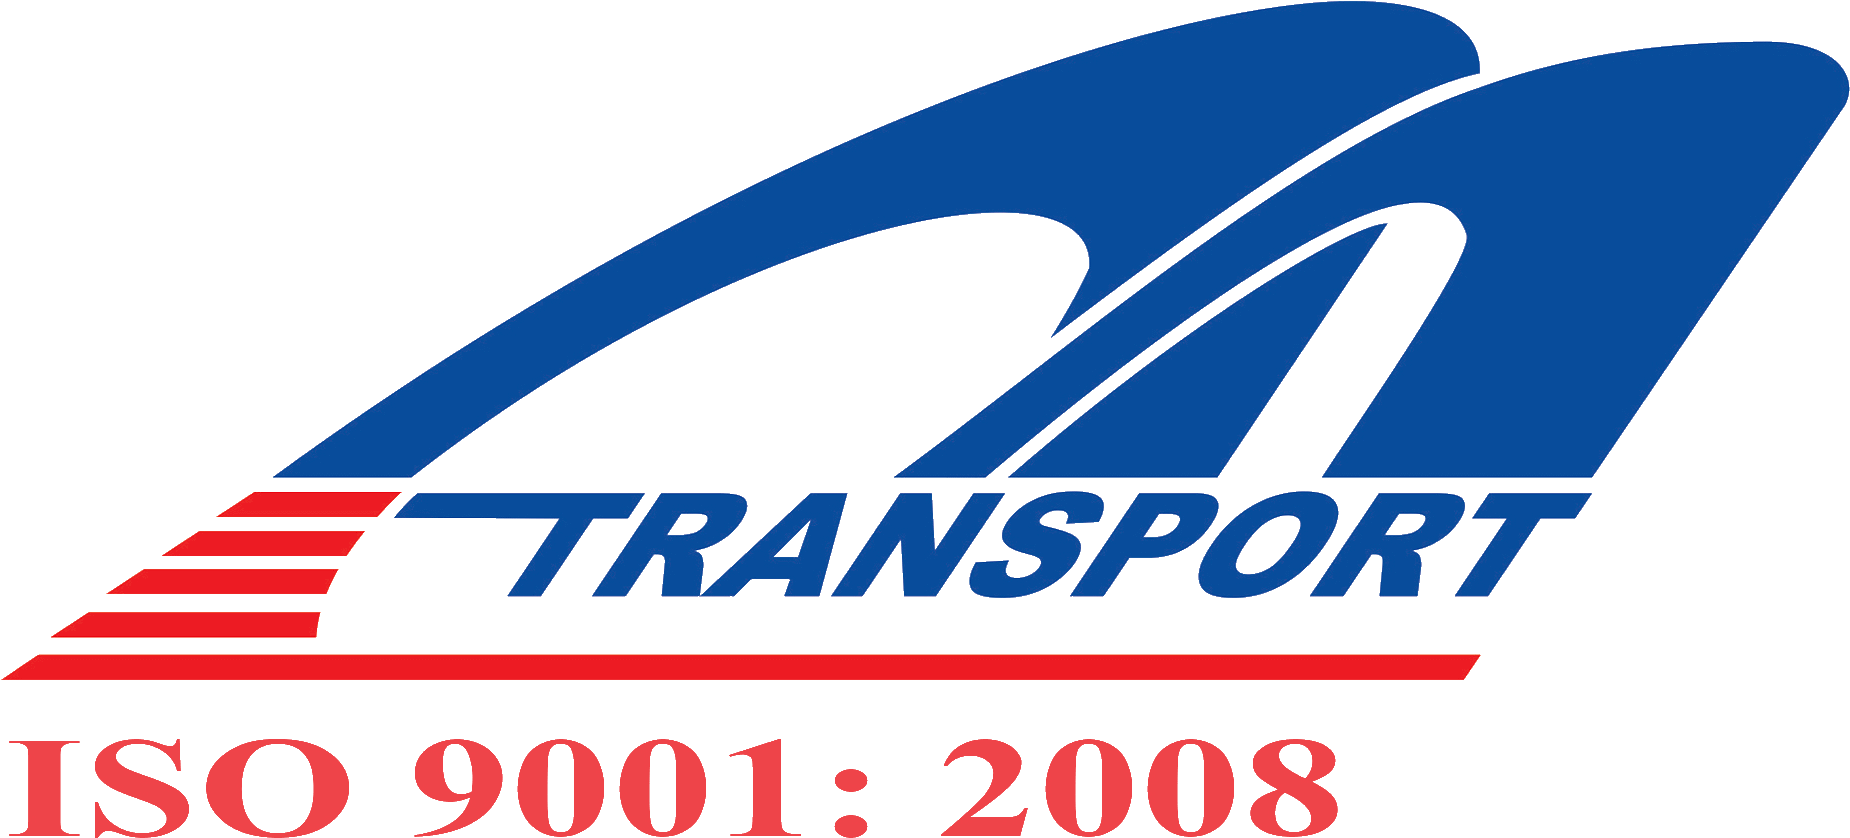 Aa Transport Corporation - Corporation (1920x1080)